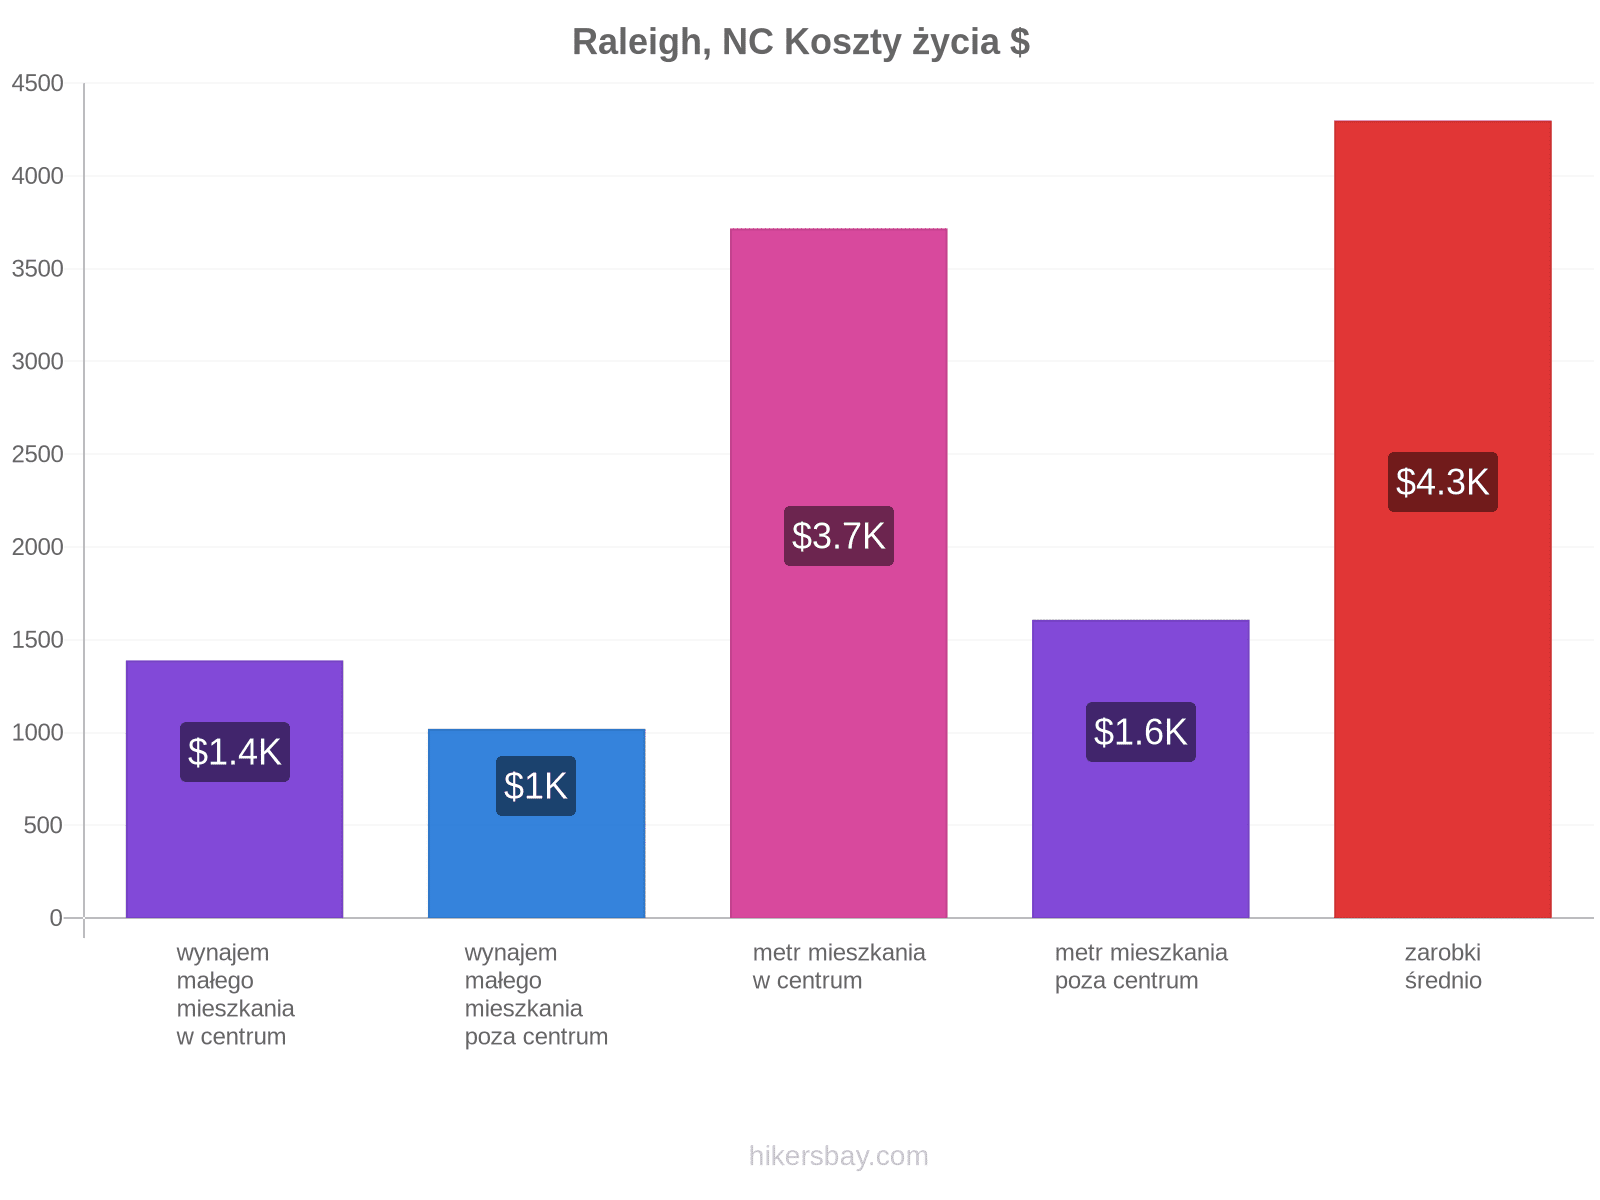 Raleigh, NC koszty życia hikersbay.com